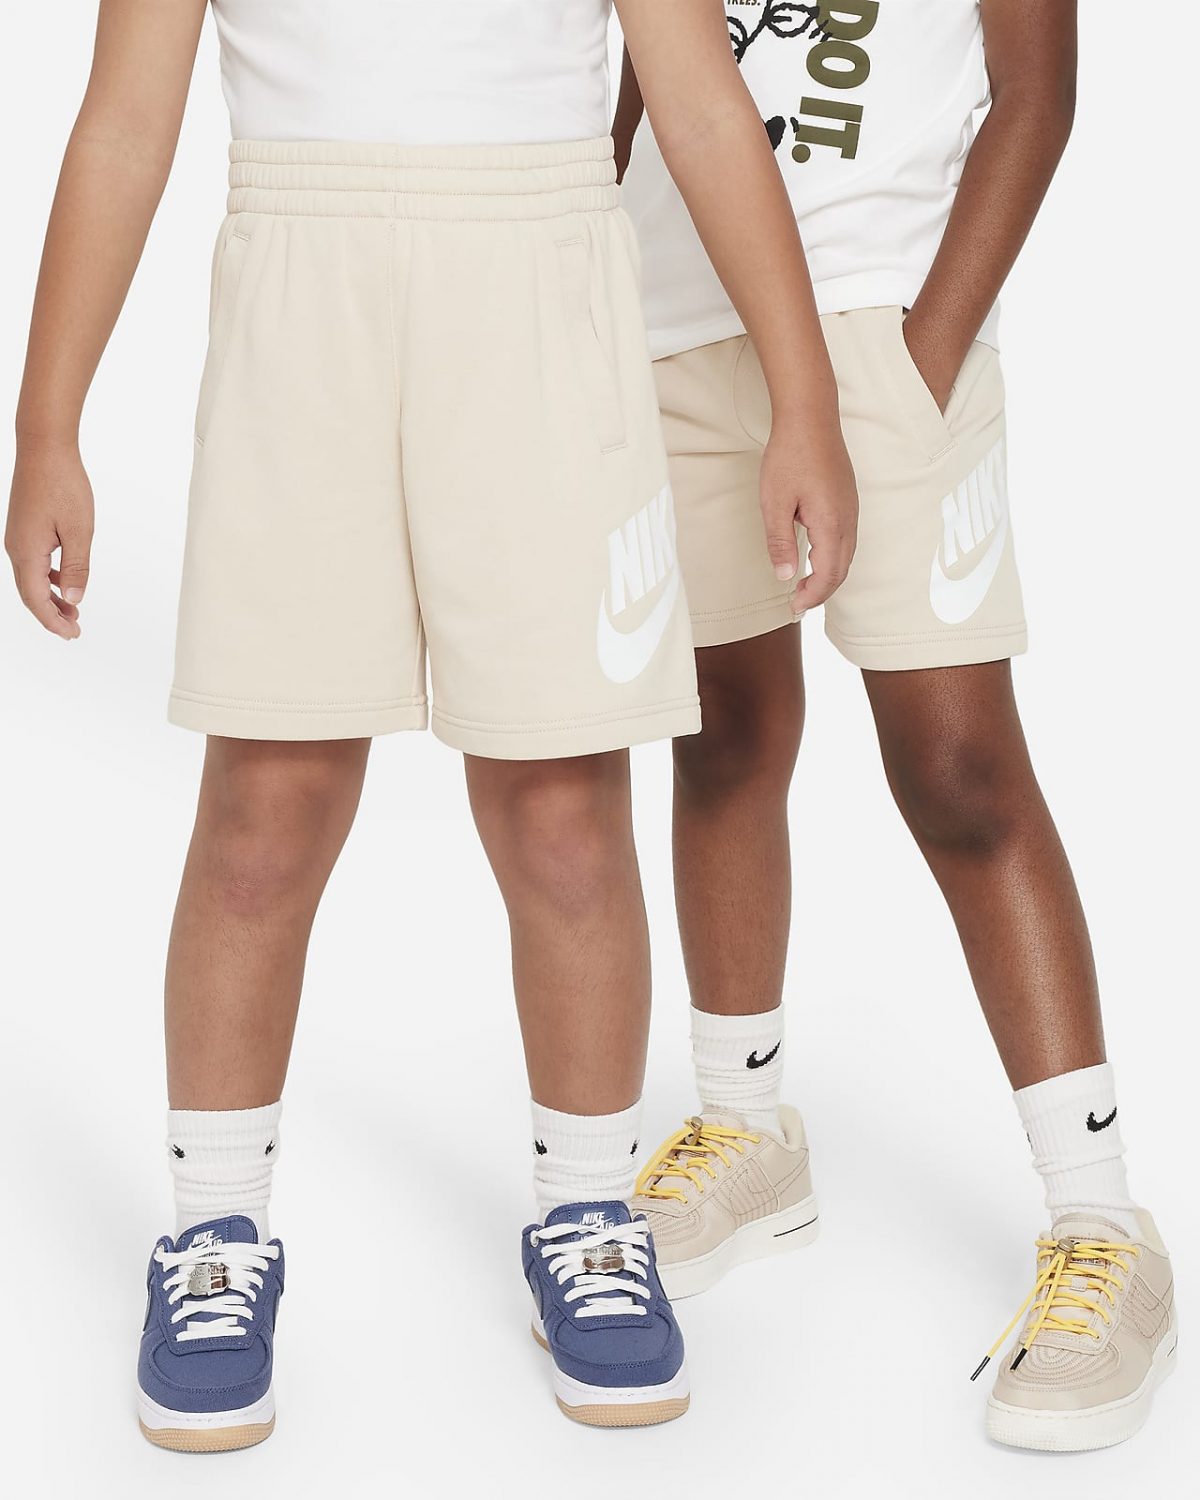 Детские шорты Nike Sportswear Club Fleece фото